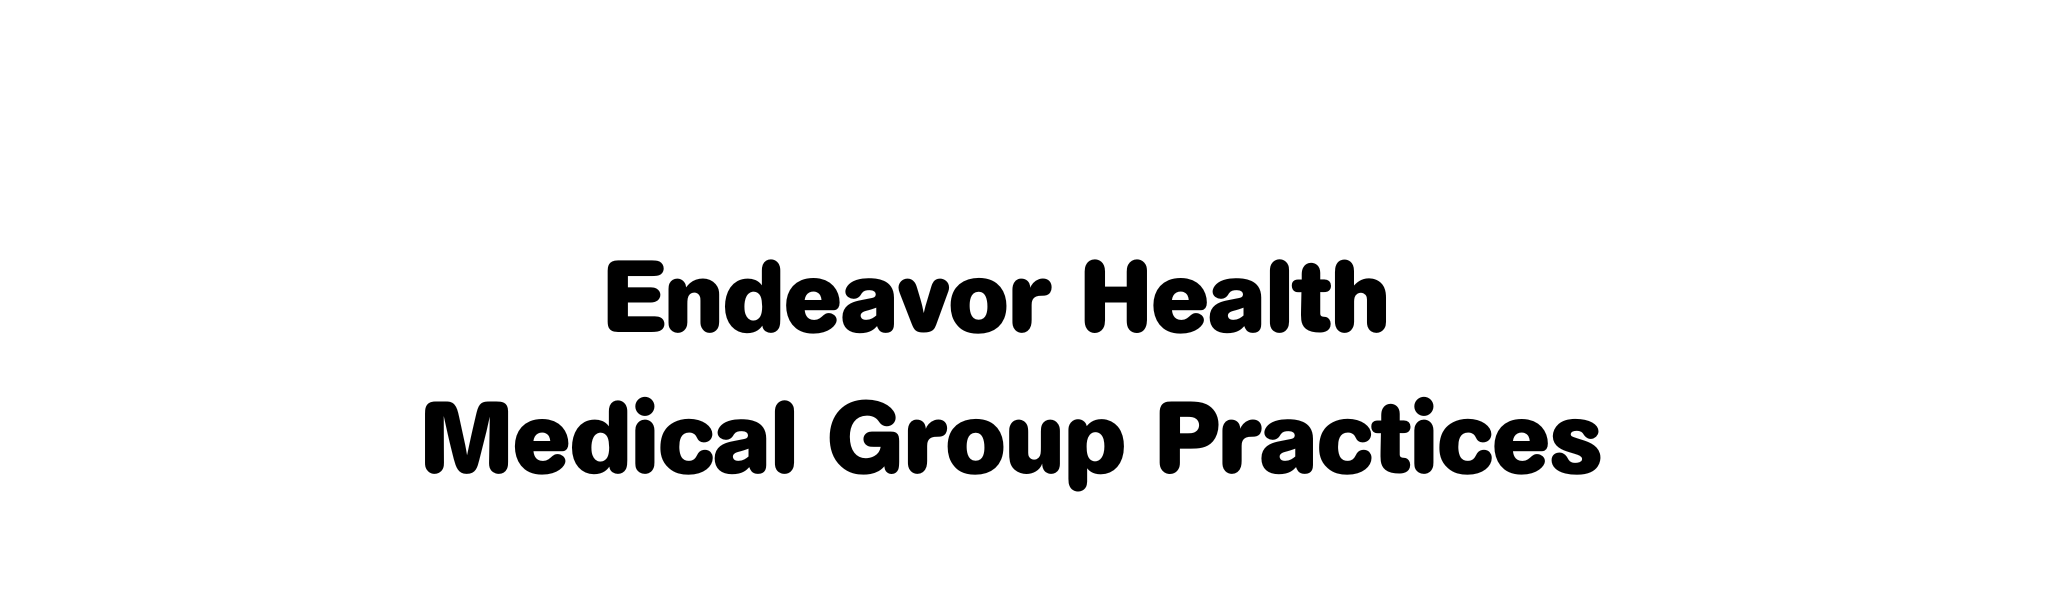 Endeavor Health Medical Group Practices (Bronze)